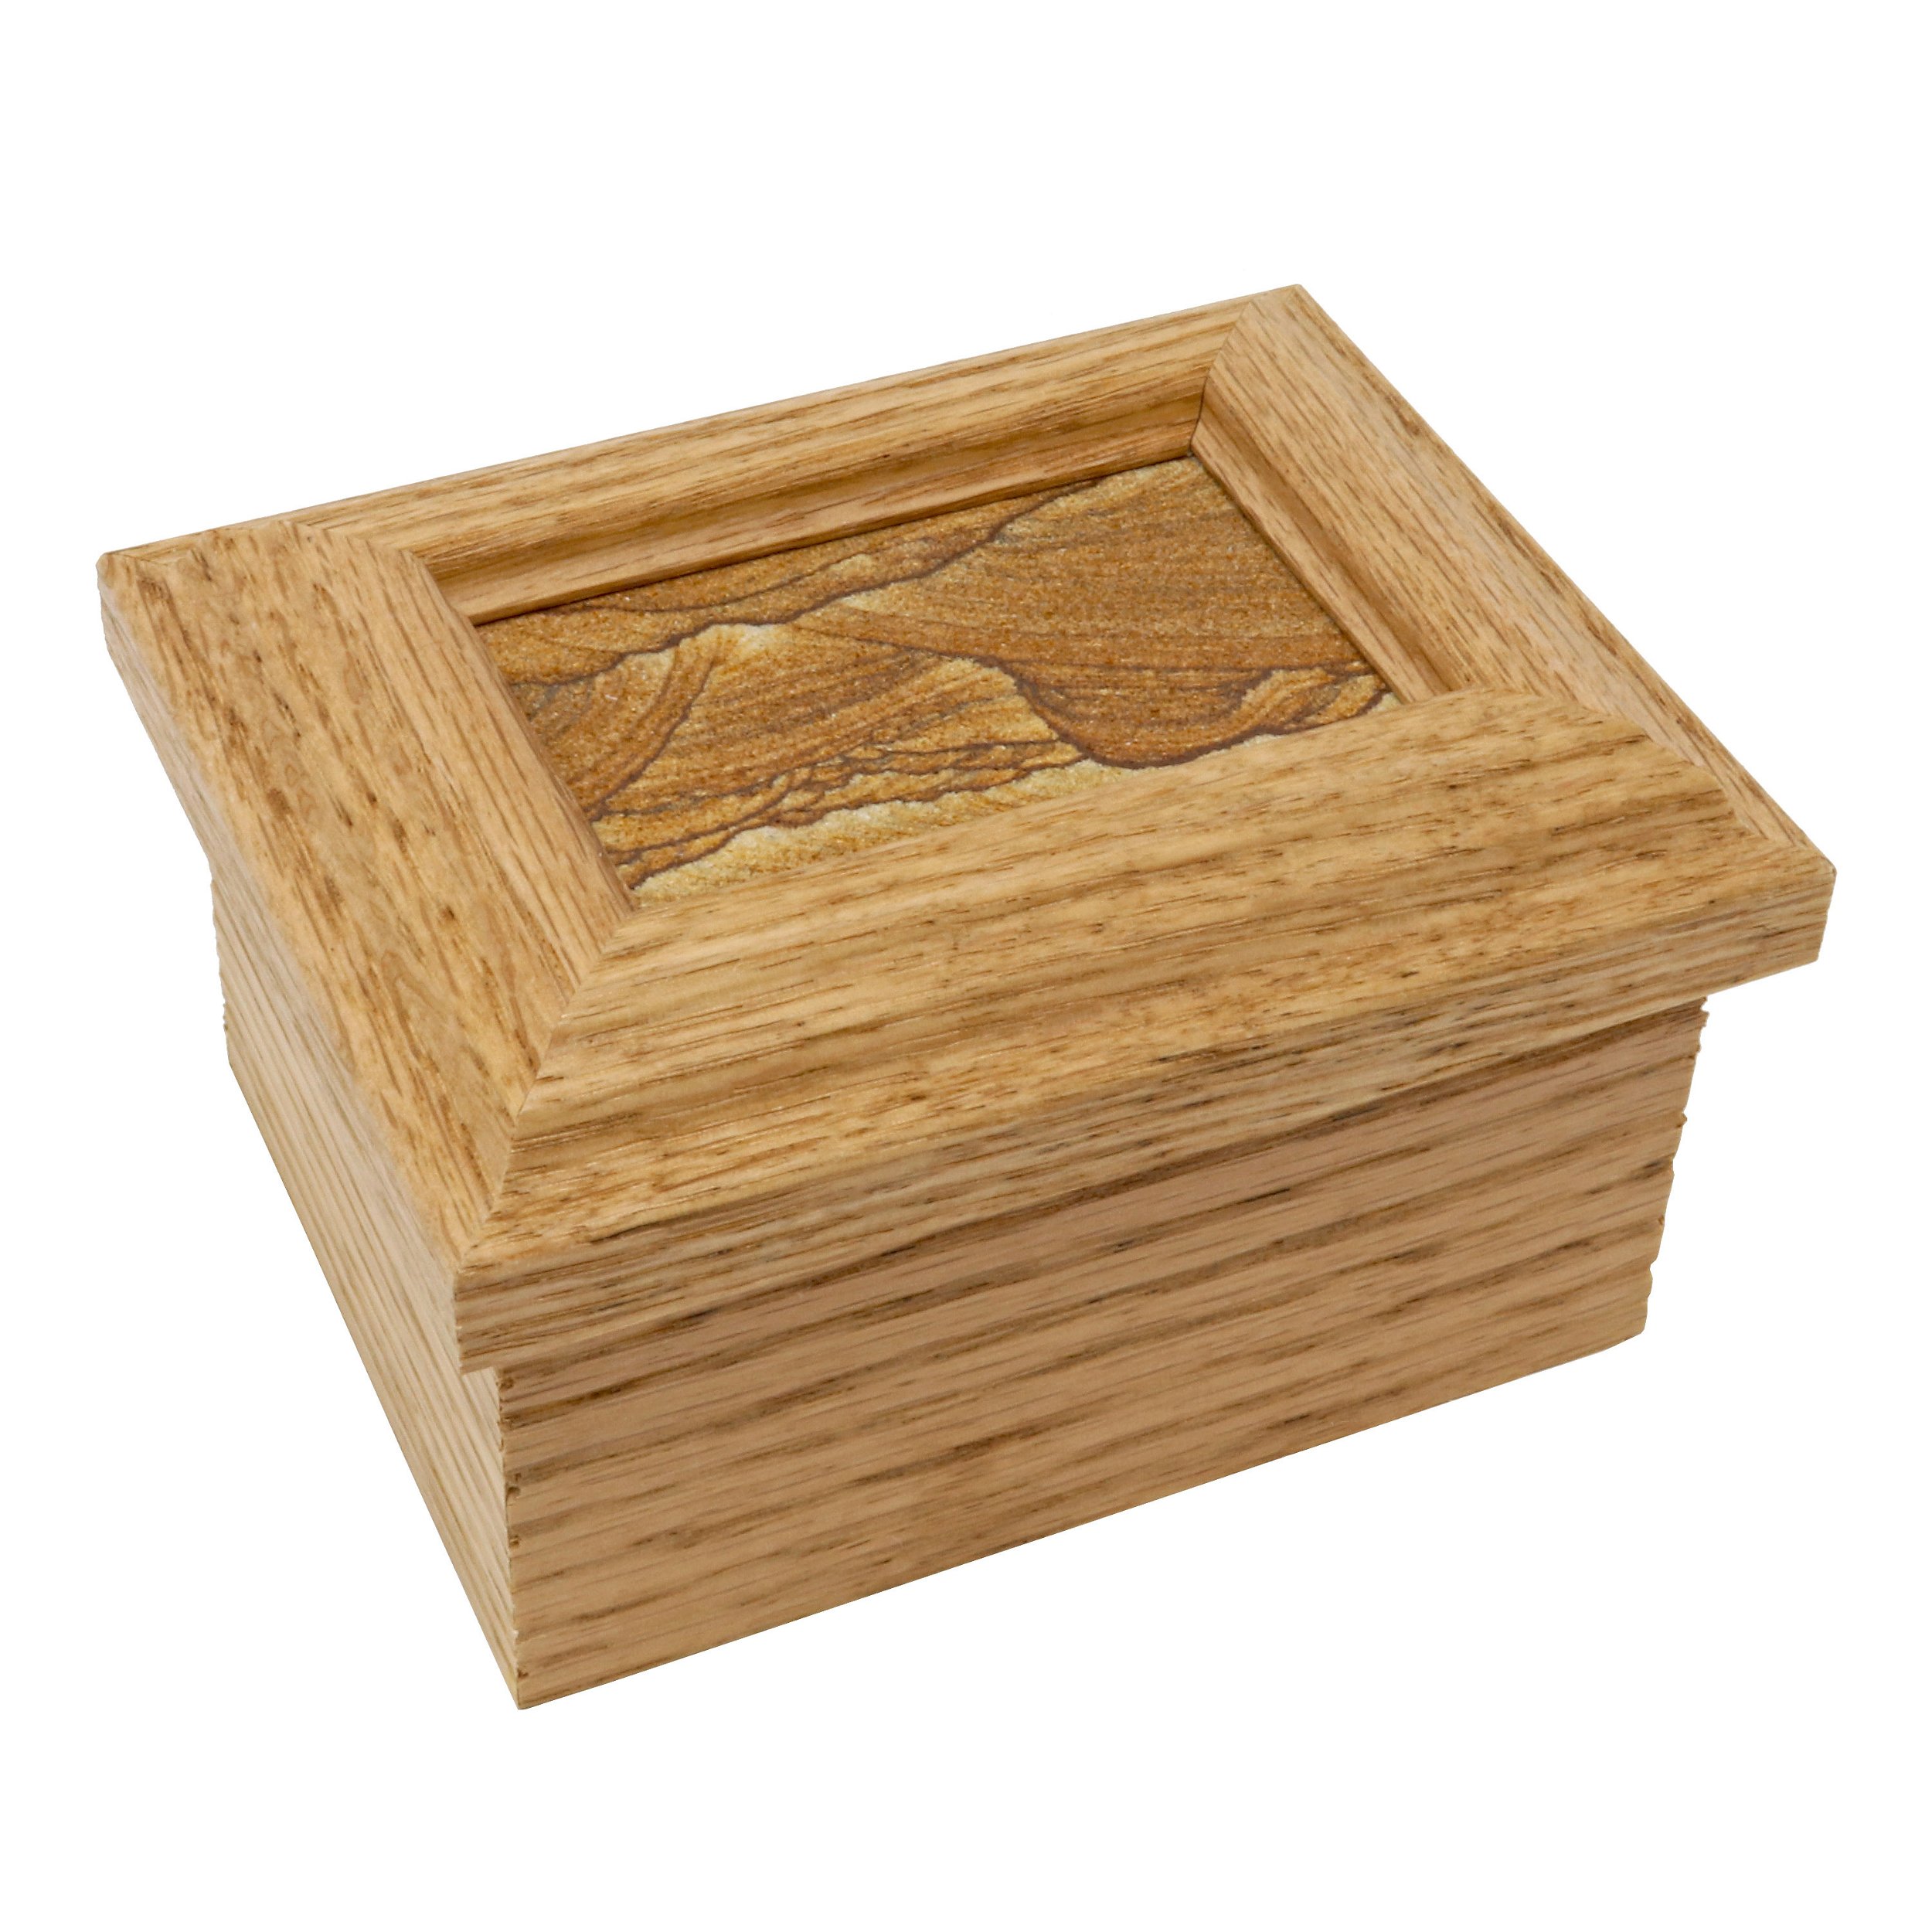 Desert Sandstone Box - Small